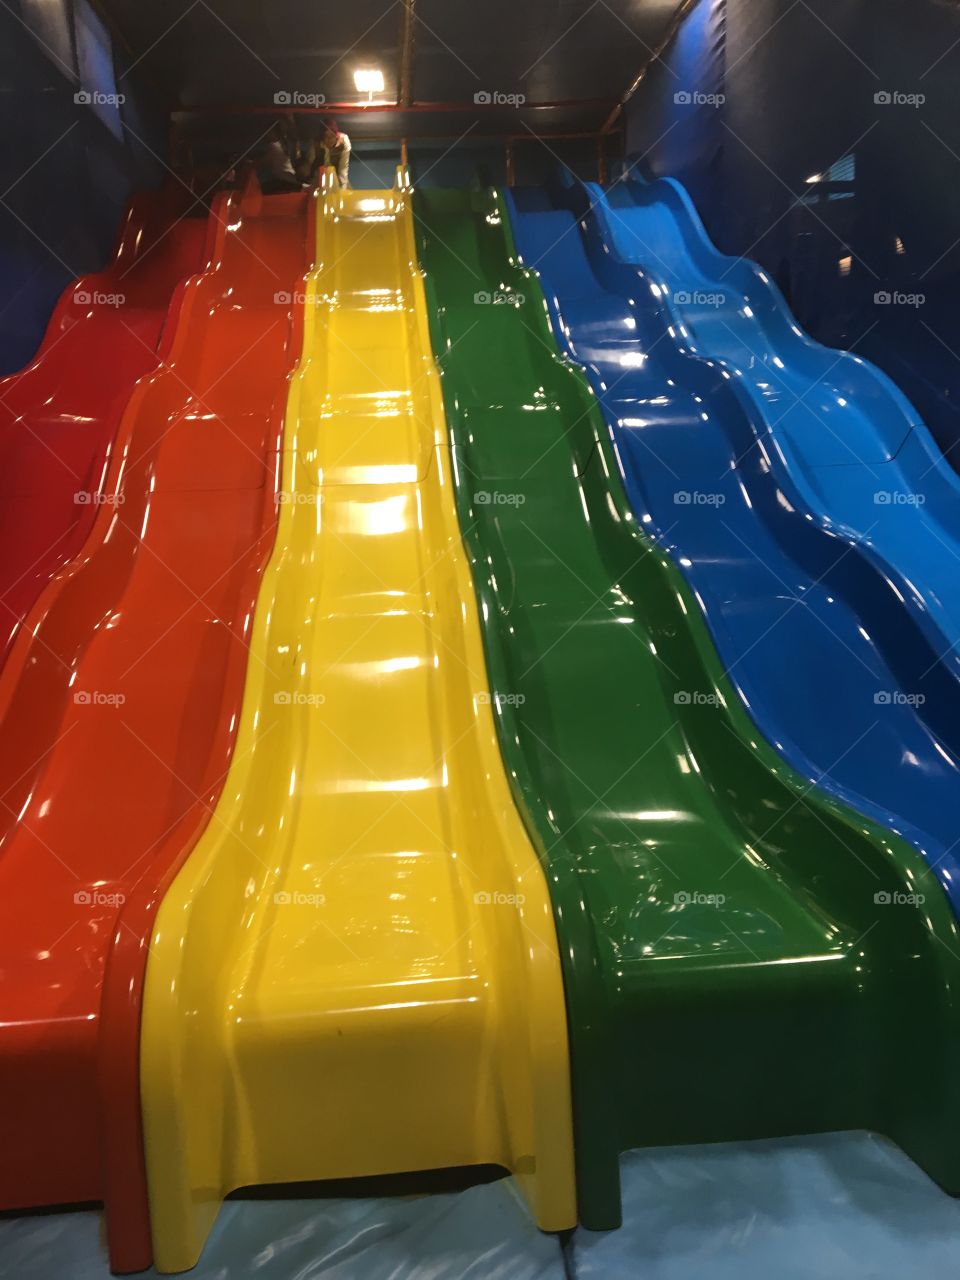 Fun rainbow slides for kids